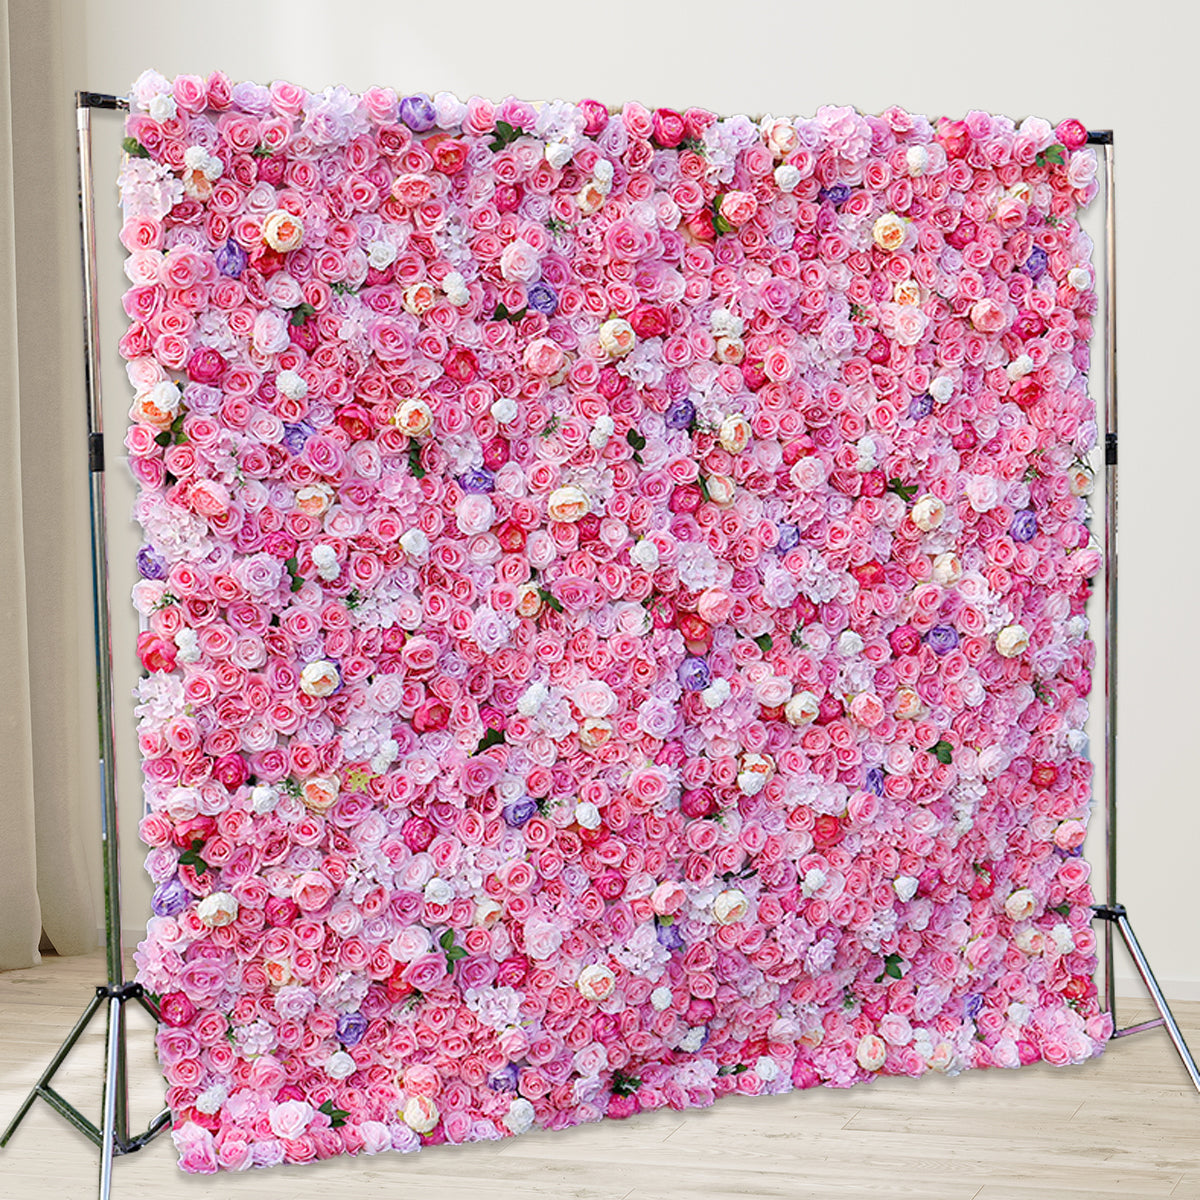 3D Artificial Flower Wall Arrangement Wedding Party Birthday Backdrop Decor HQ3501